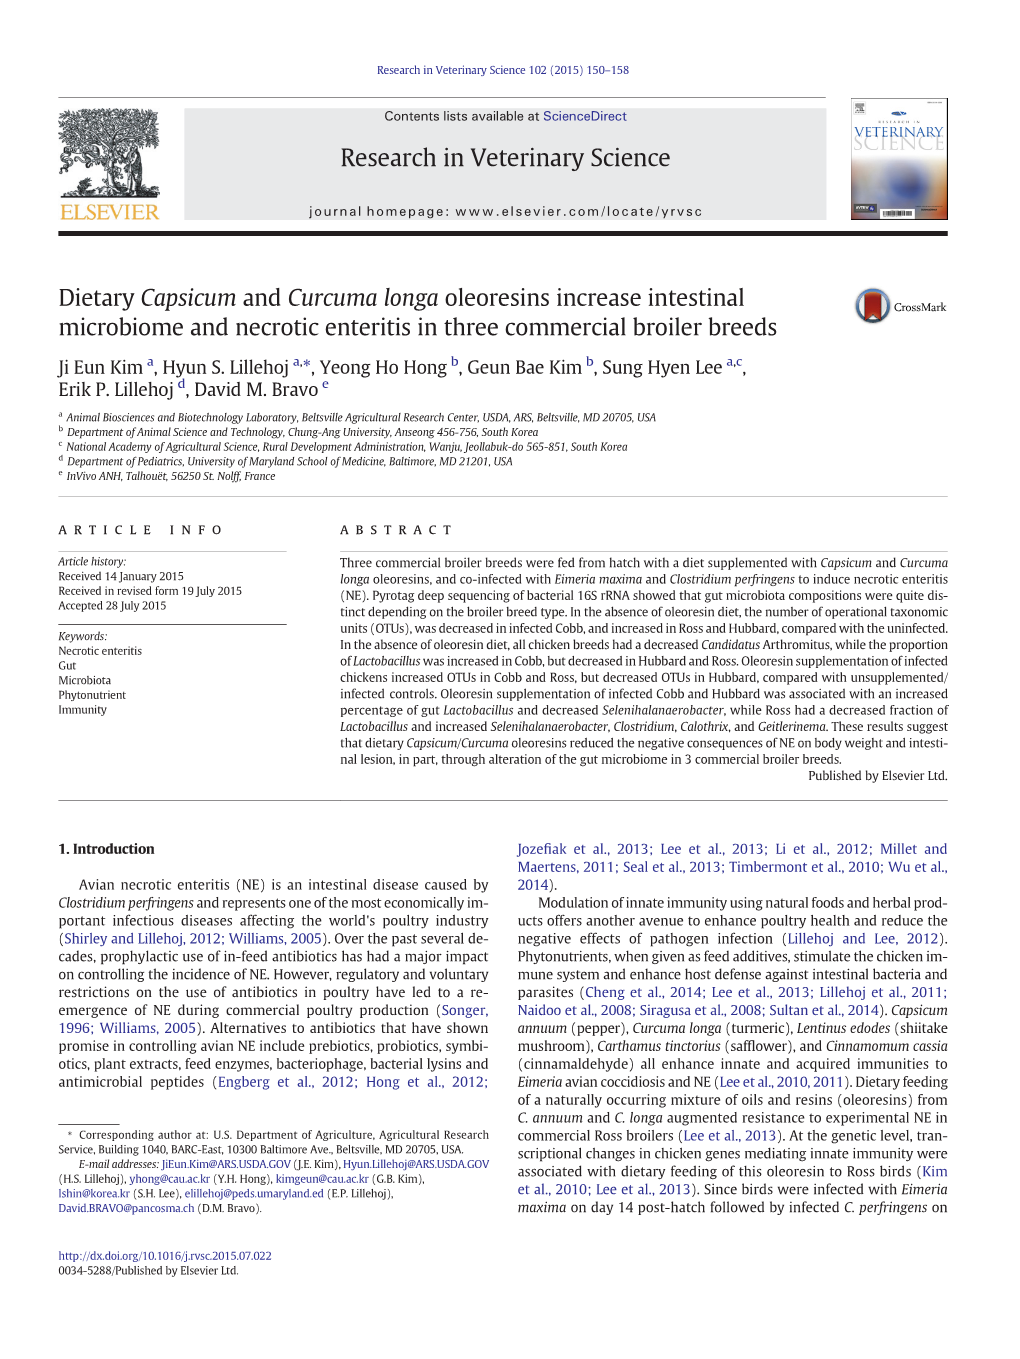 Dietary Capsicum and Curcuma Longa Oleoresins Increase Intestinal Microbiome and Necrotic Enteritis in Three Commercial Broiler Breeds